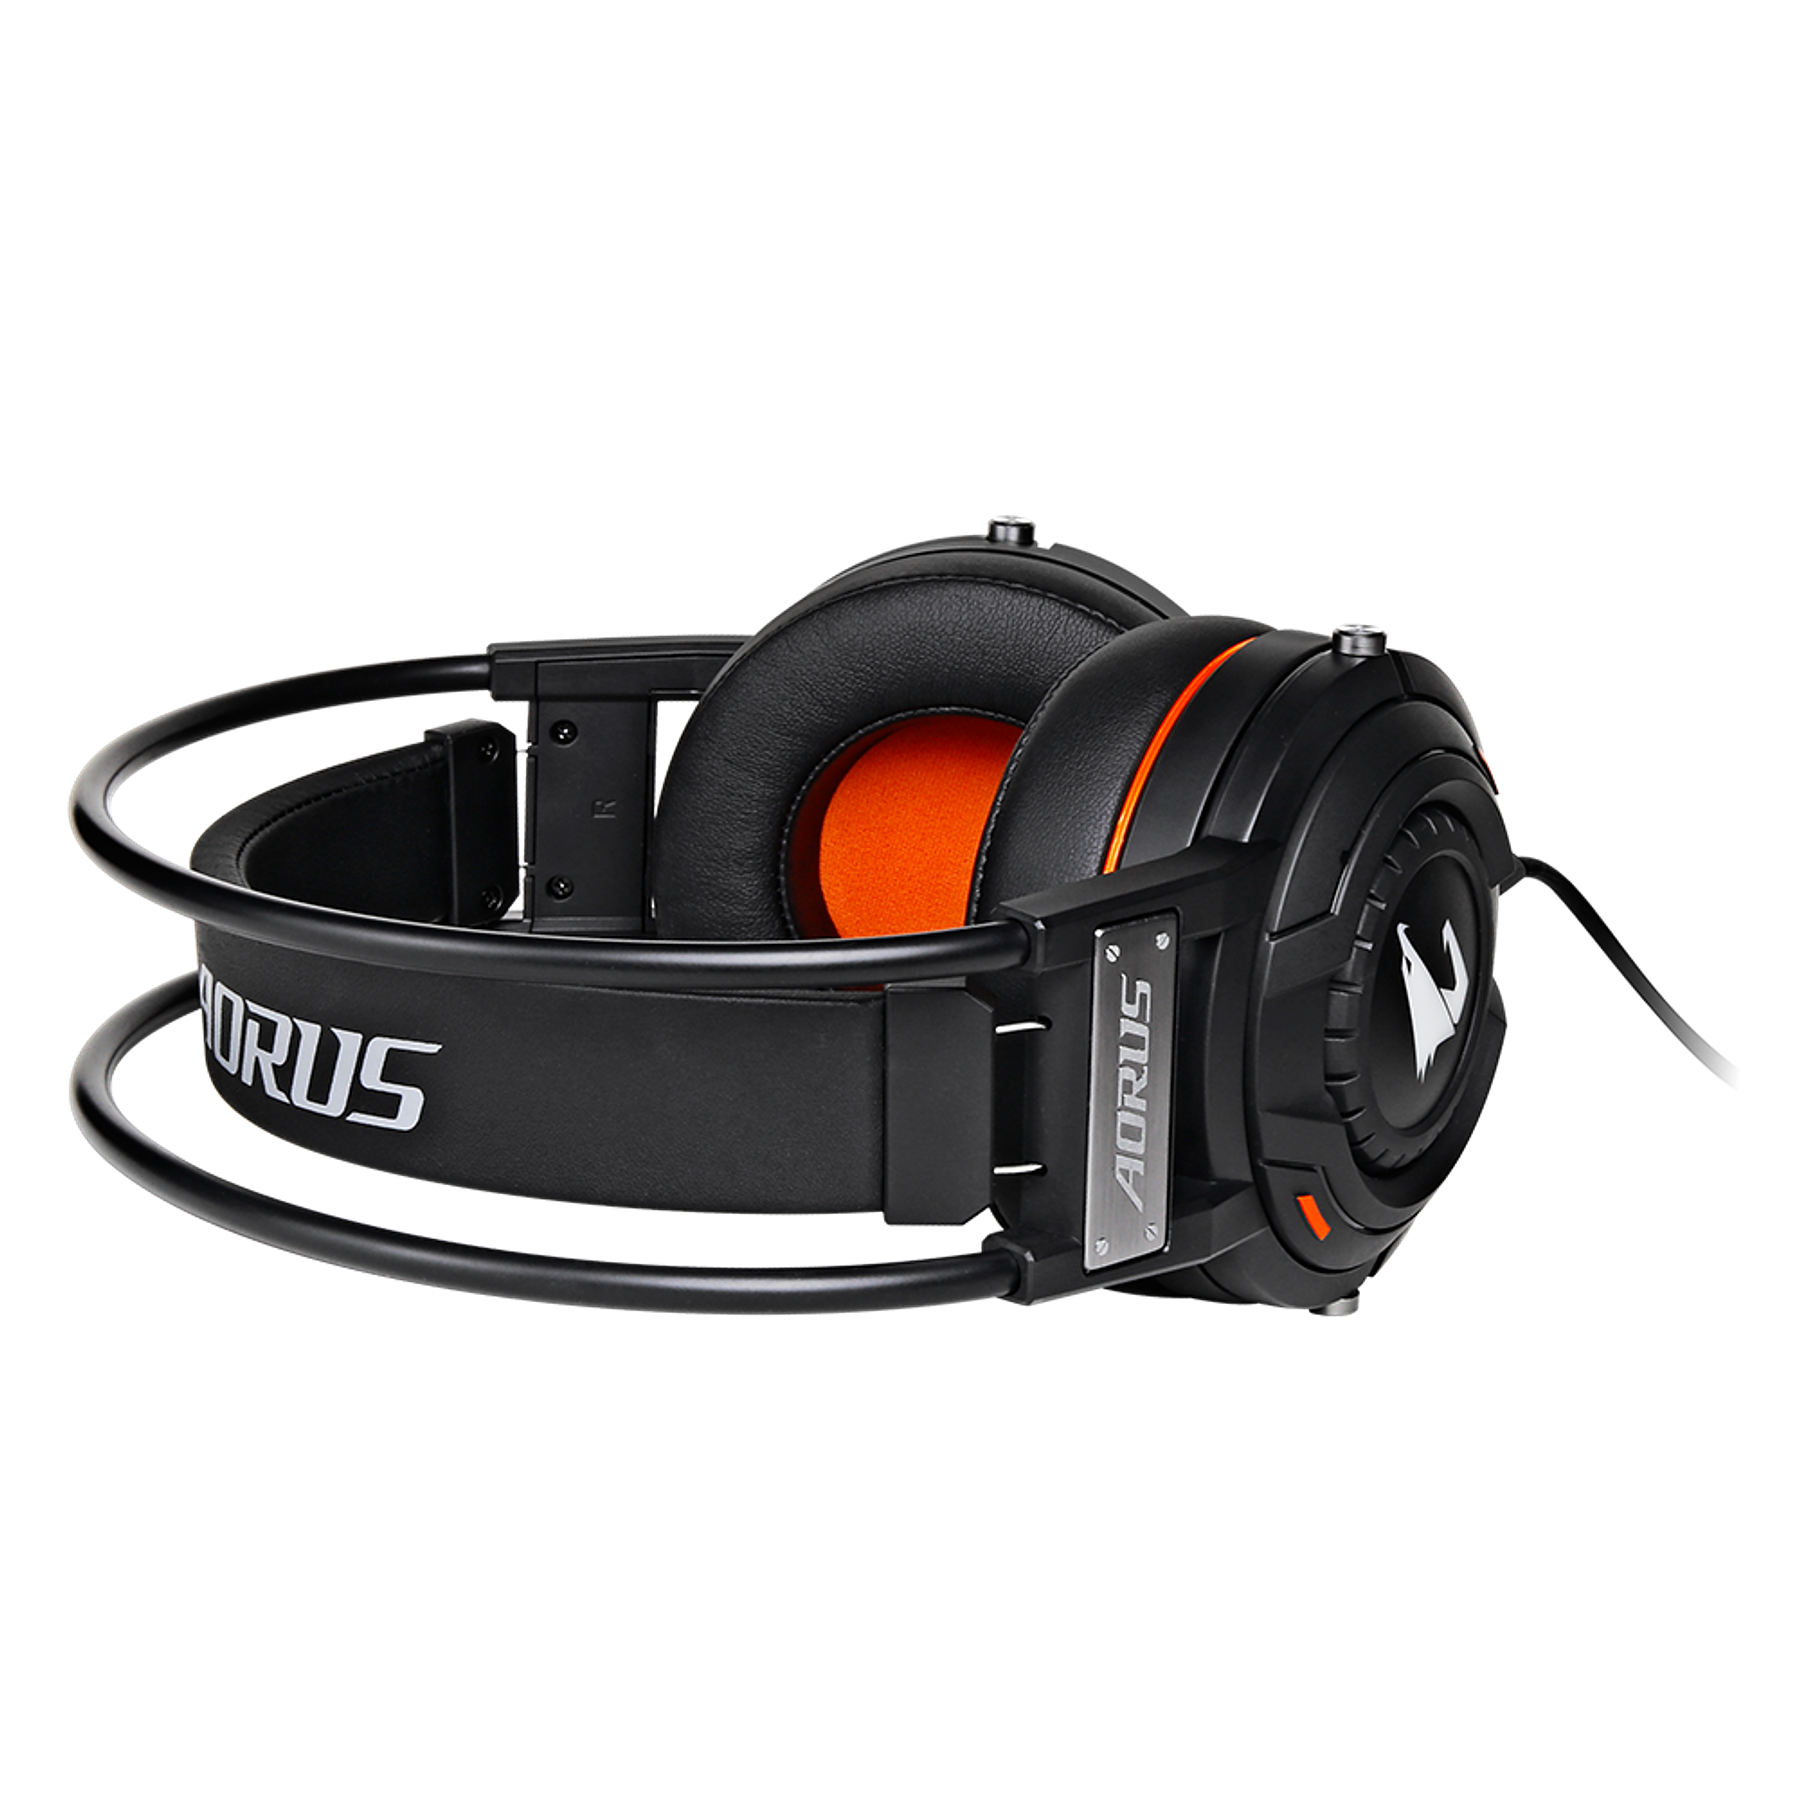 Aorus H5 Headset RGB